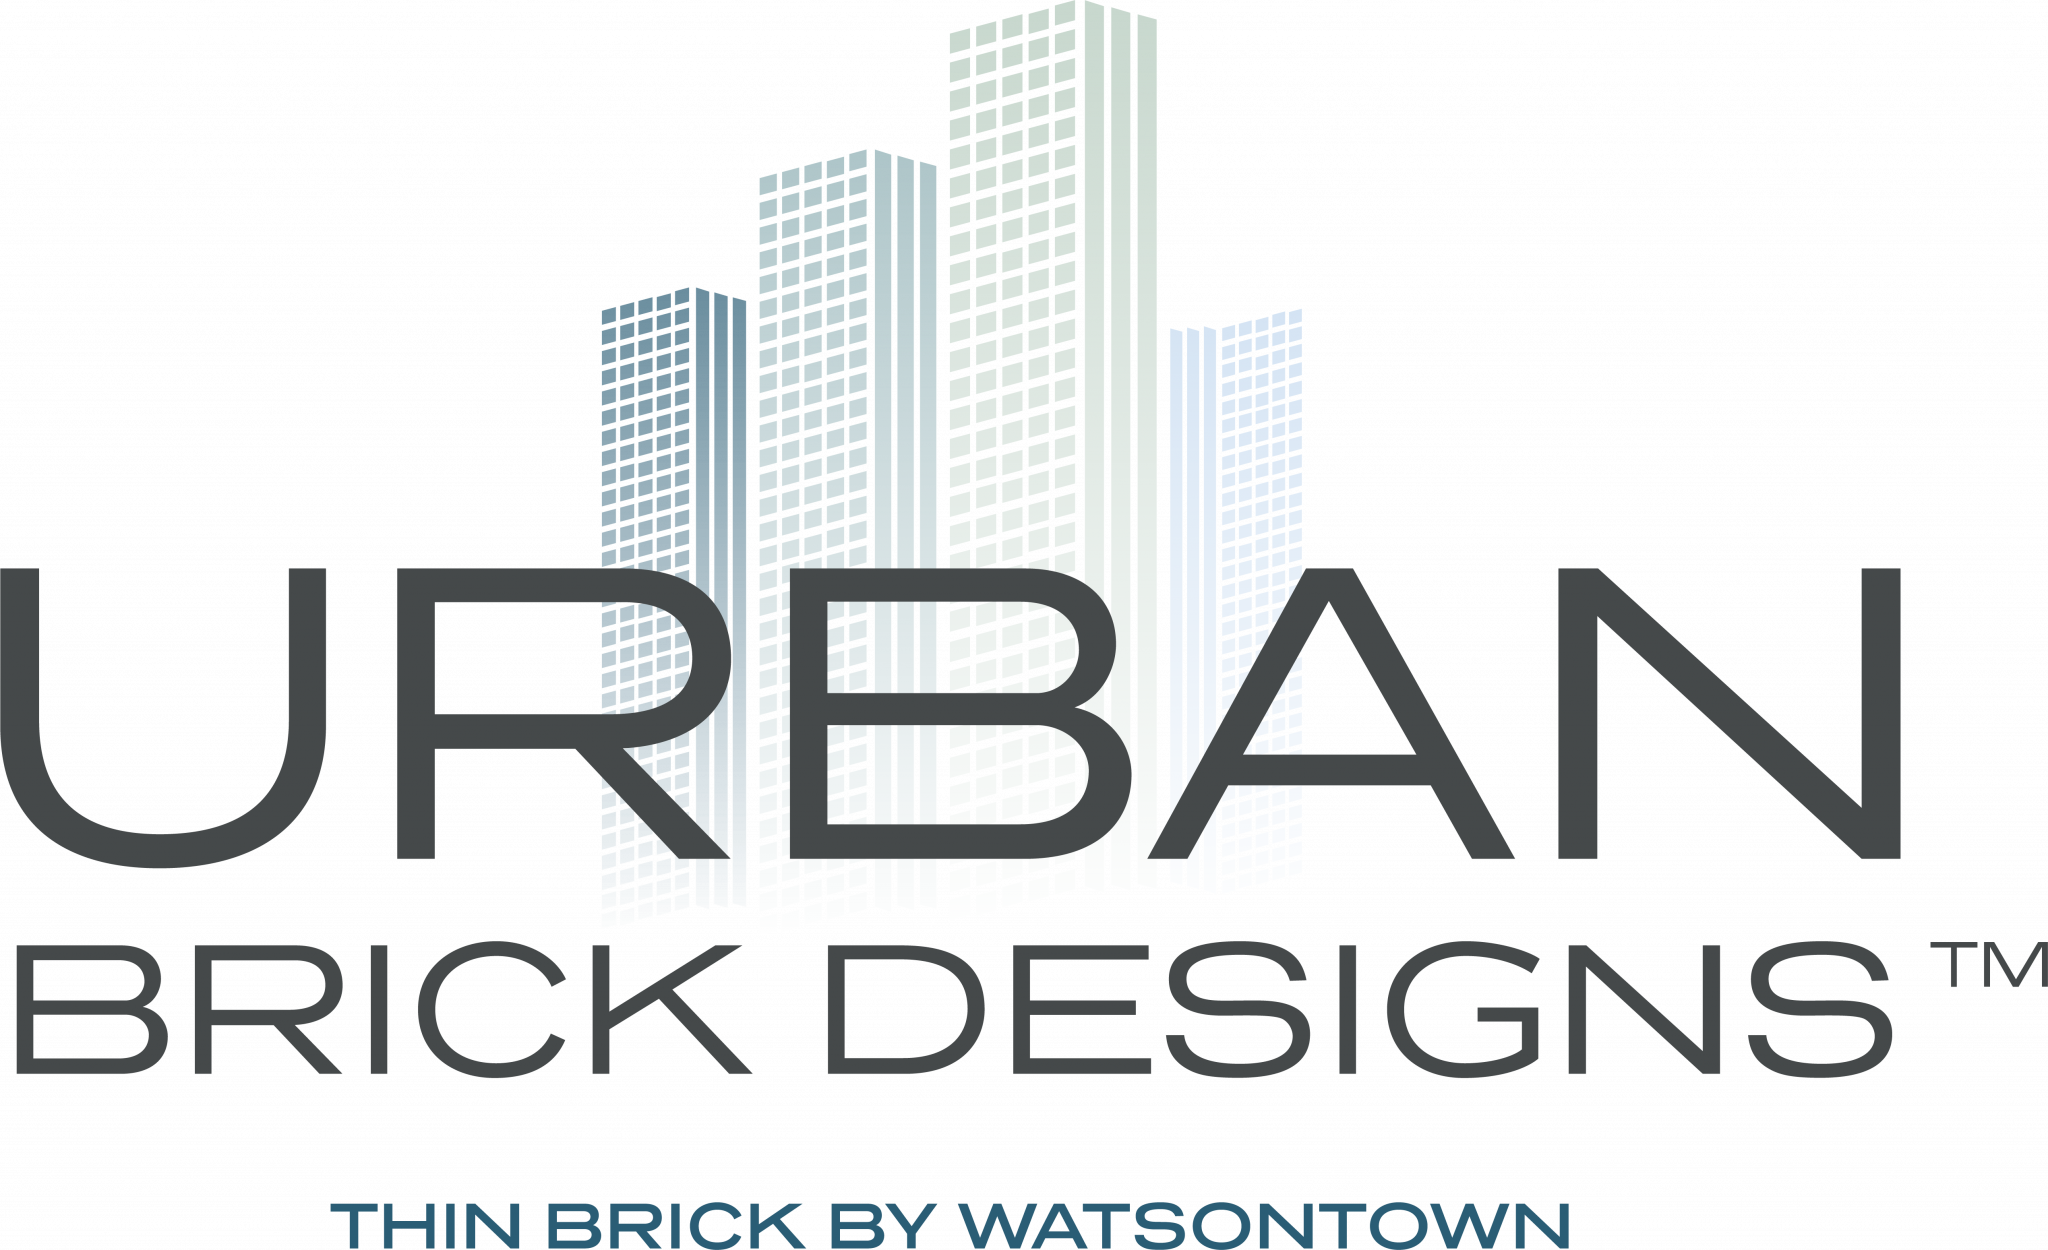 Urban Brick Designs - Thin Brick by Watsontown Brick